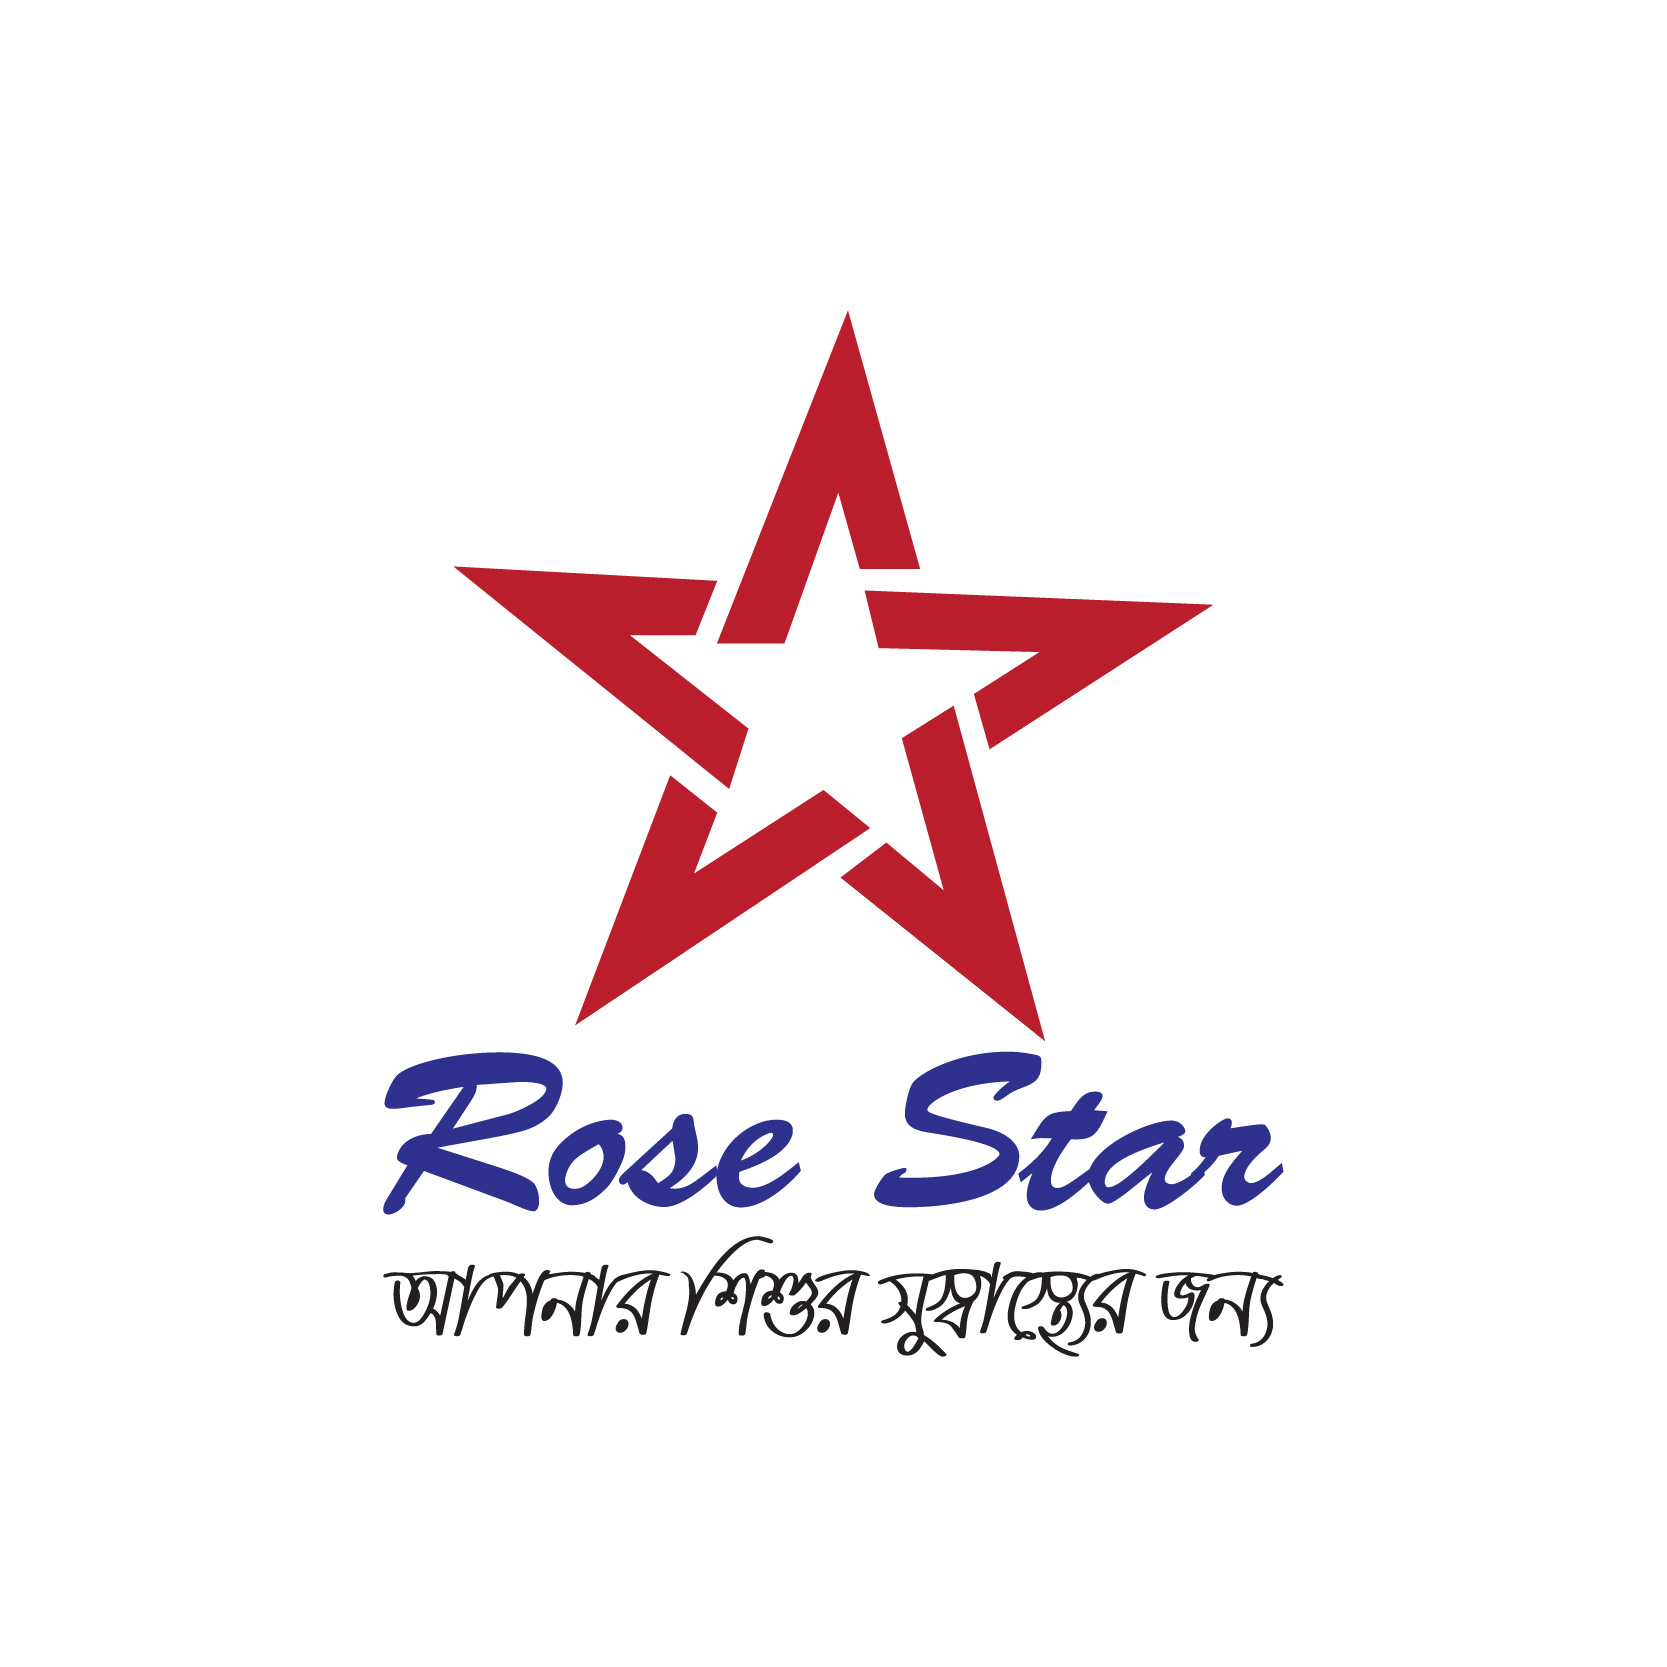 Rose Star Program (RSP)